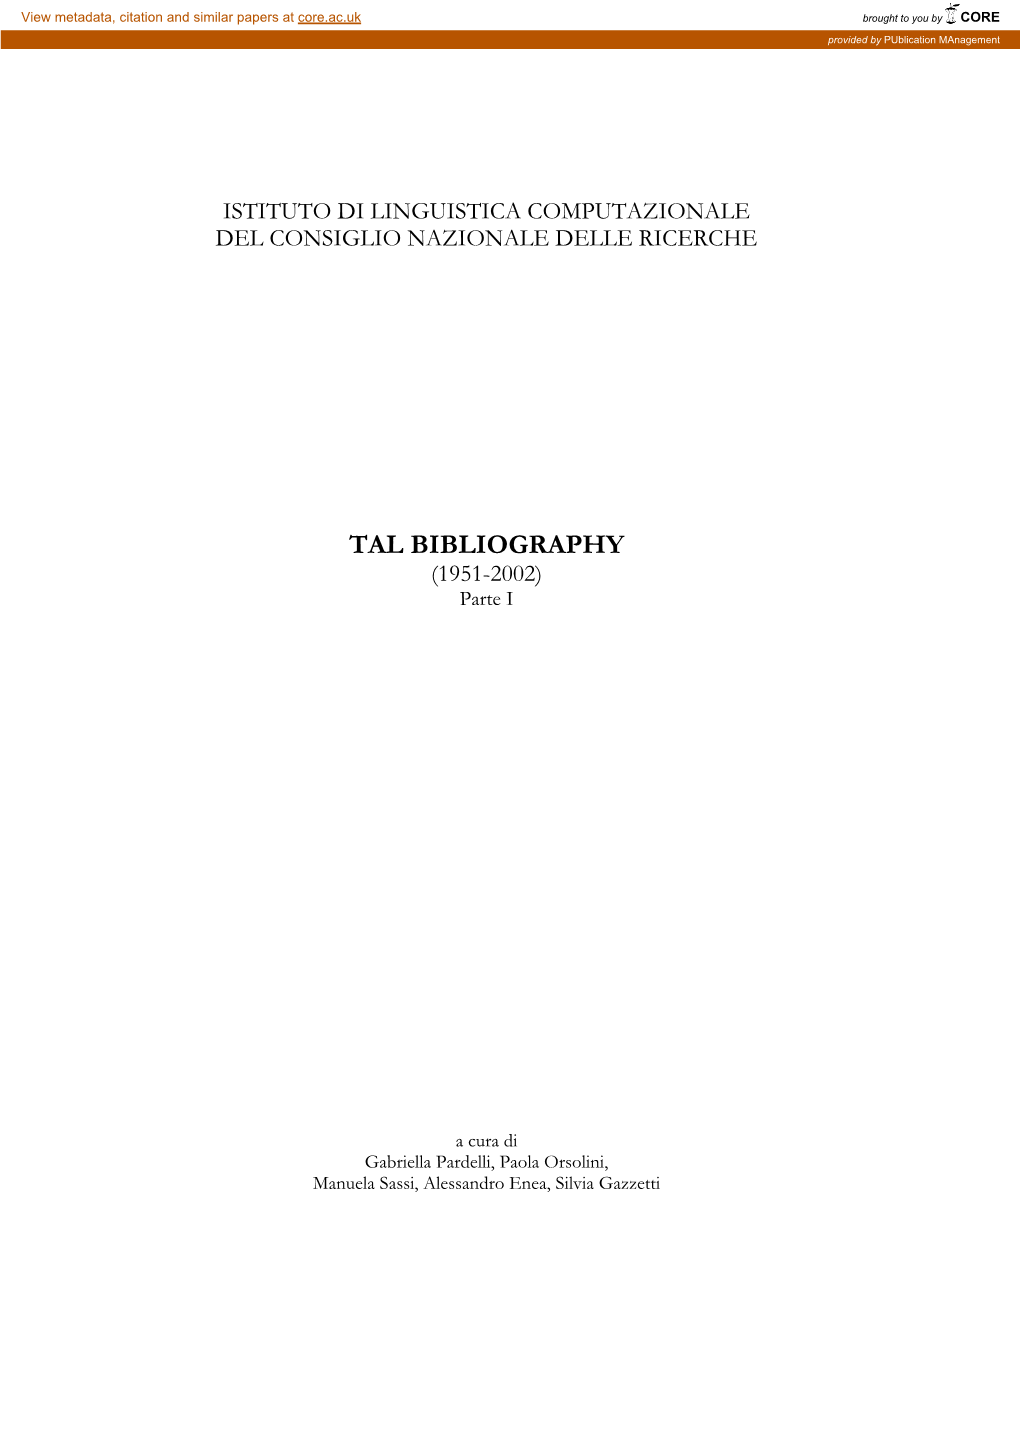 TAL BIBLIOGRAPHY (1951-2002) Parte I